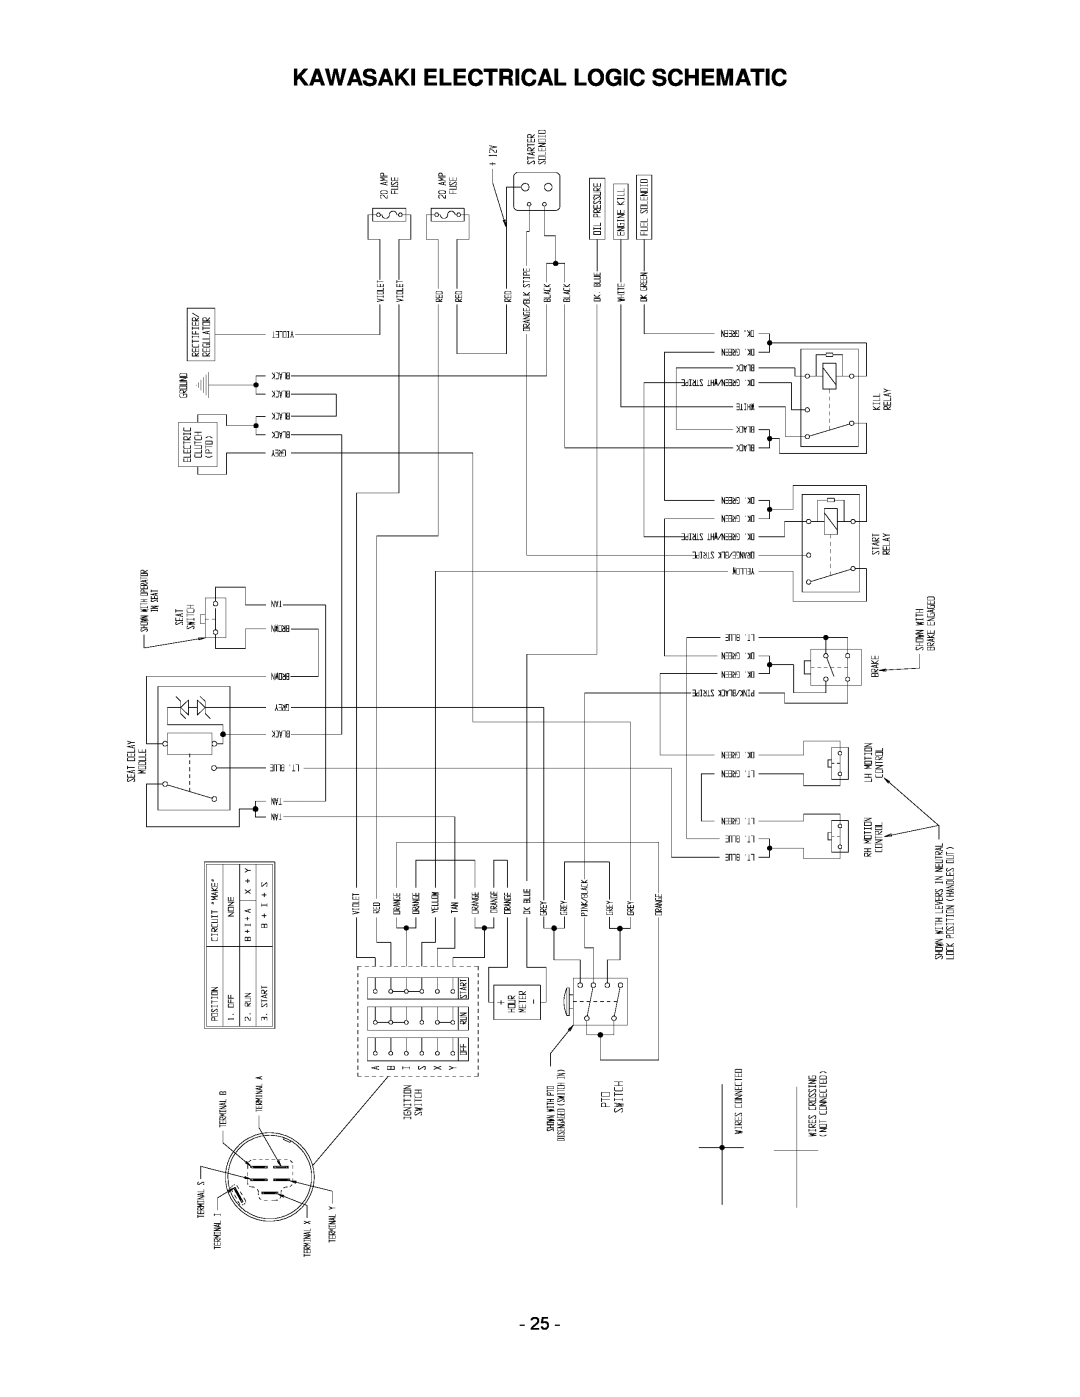 Exmark 565, 465, 505 manual Kawasaki Electrical Logic Schematic 